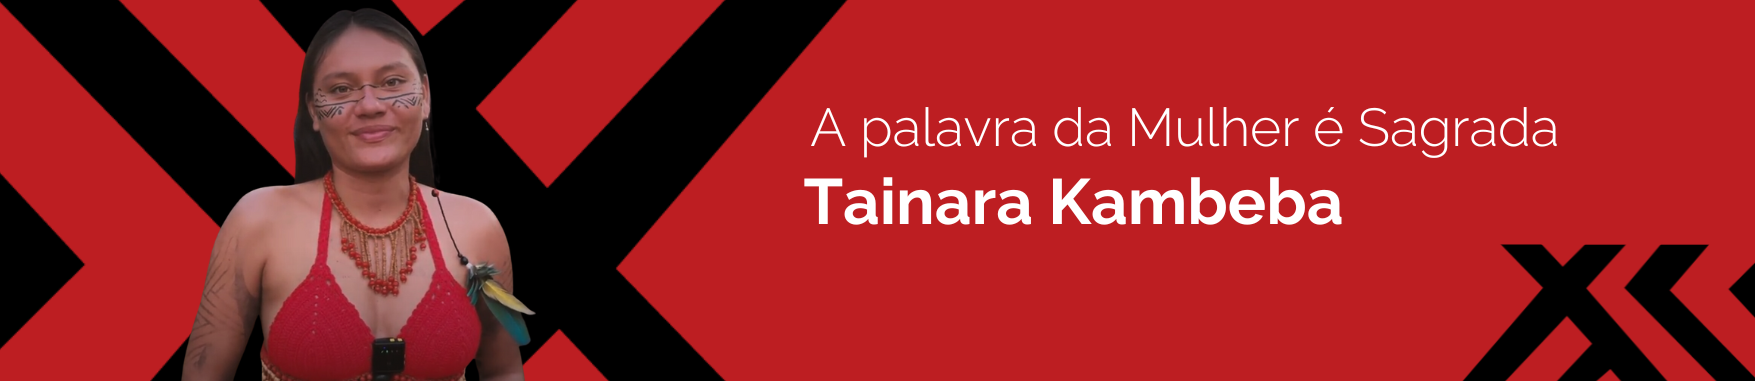 Banner com a imagem da Tainara Kambeba